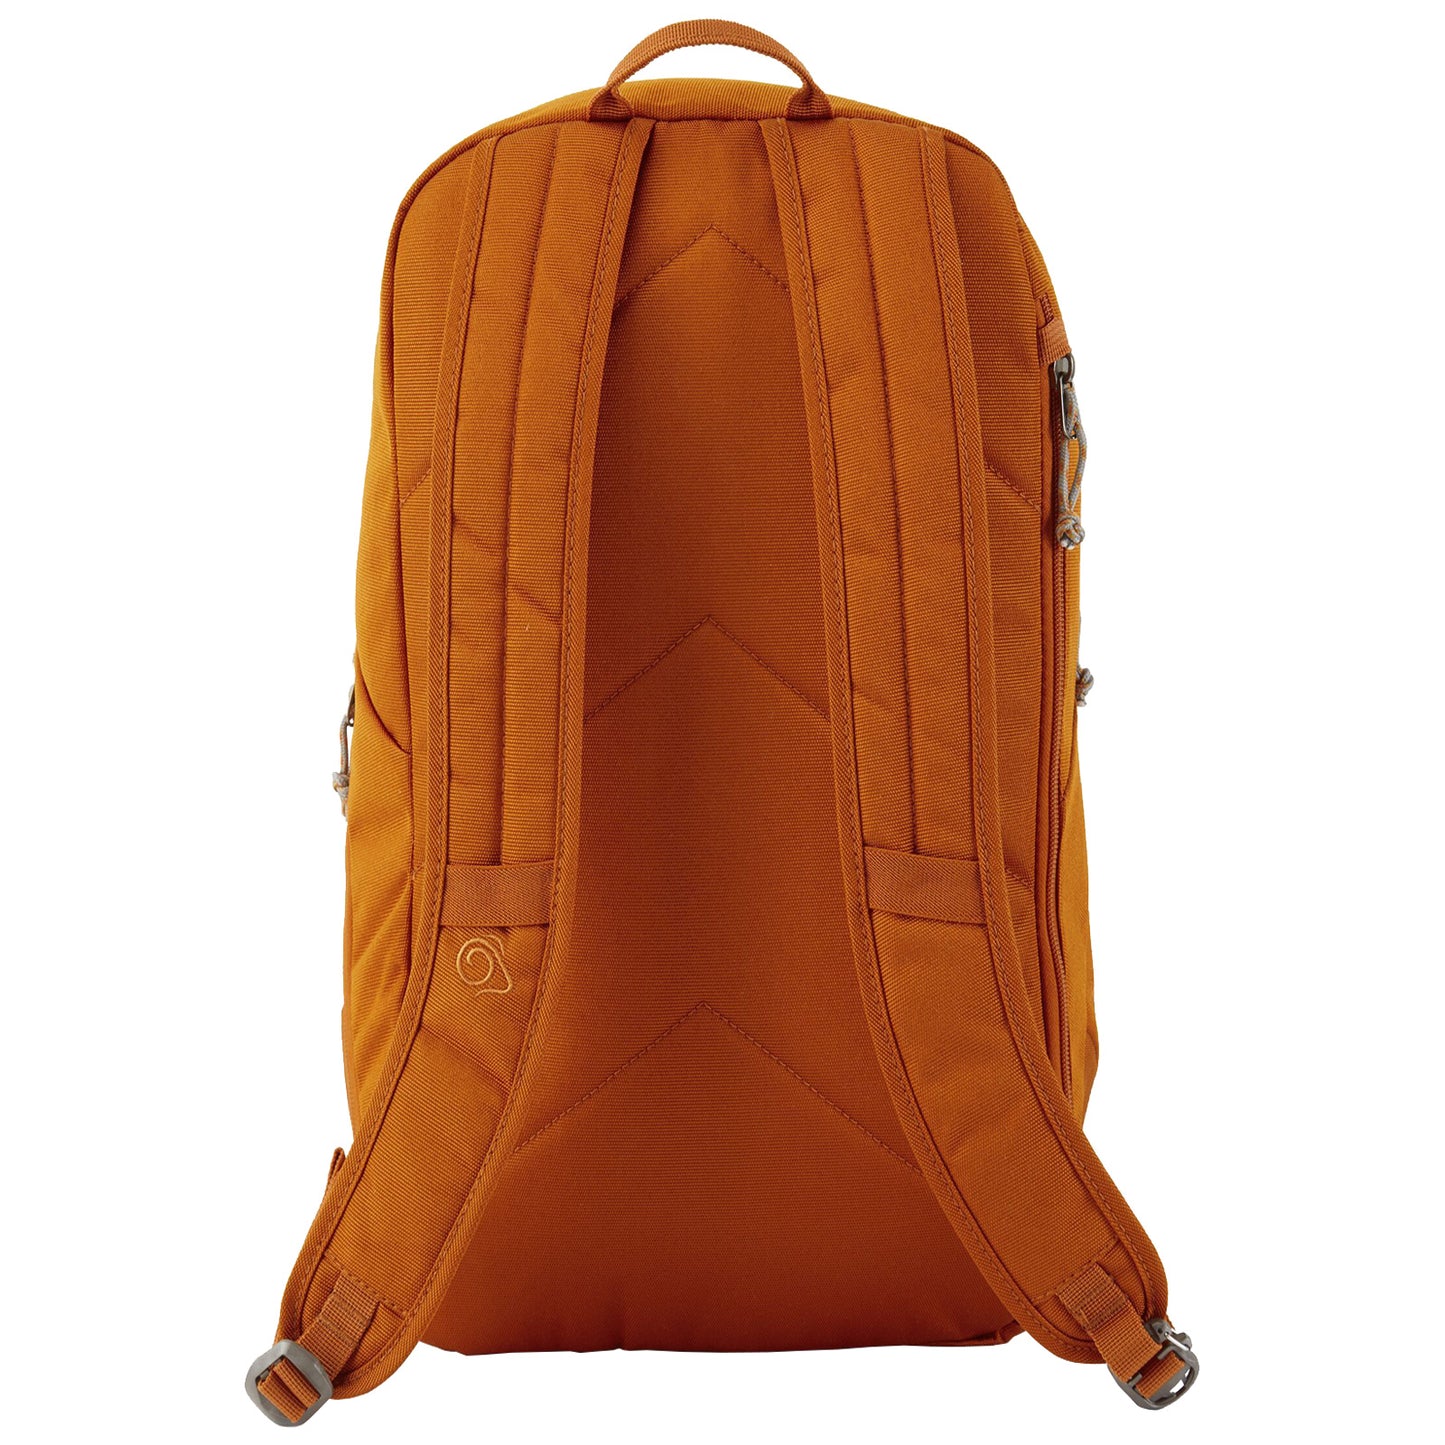 Craghoppers 22L Kiwi Classic Backpack